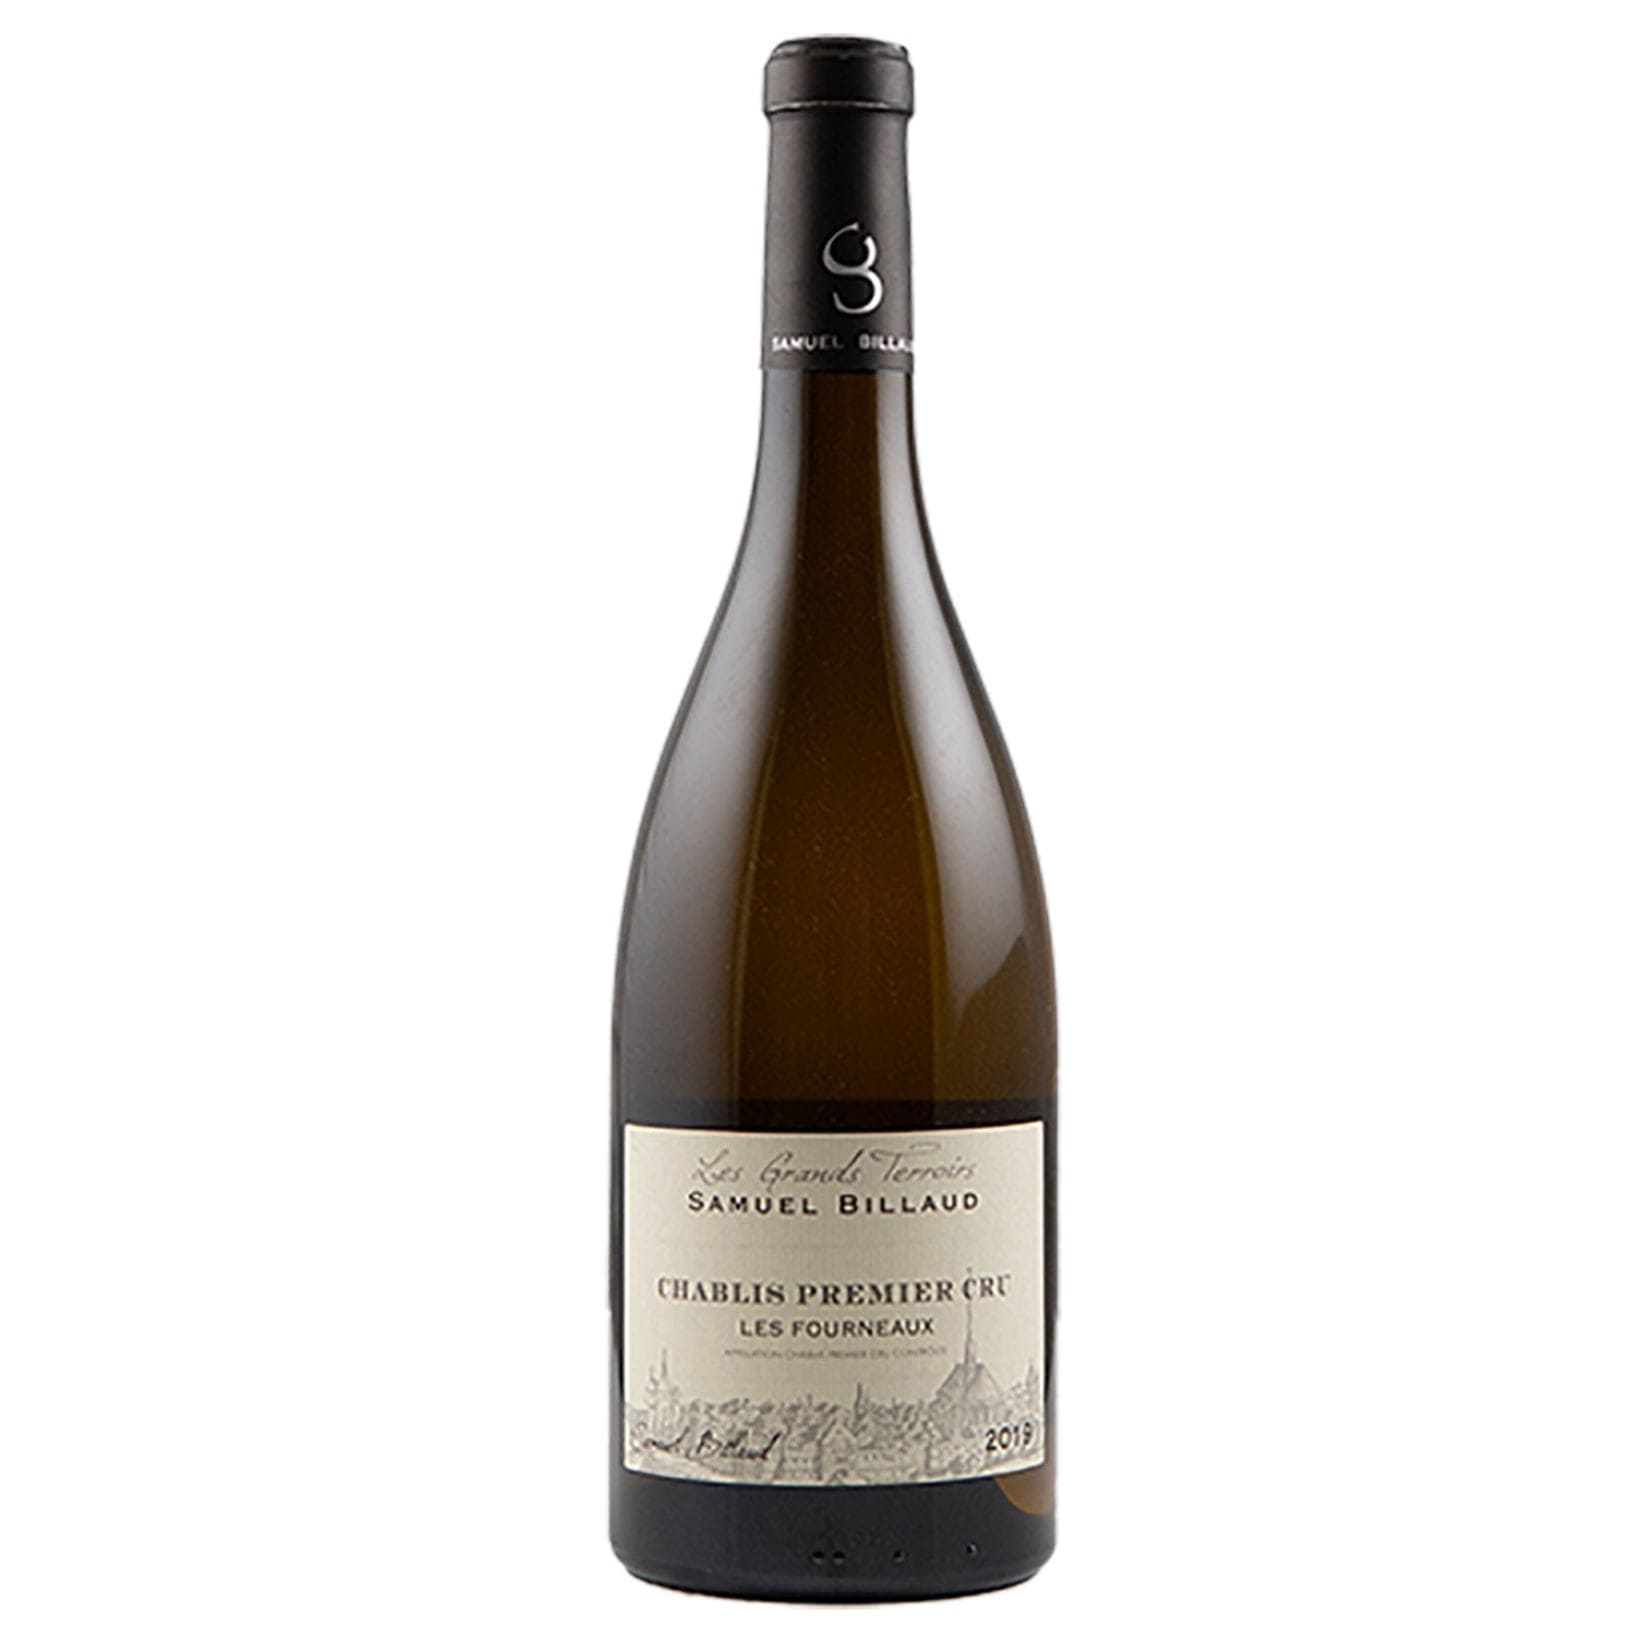 Single bottle of White wine Samuel Billaud, Les Fourneaux Premier Cru, Chablis, 2019 100% Chardonnay